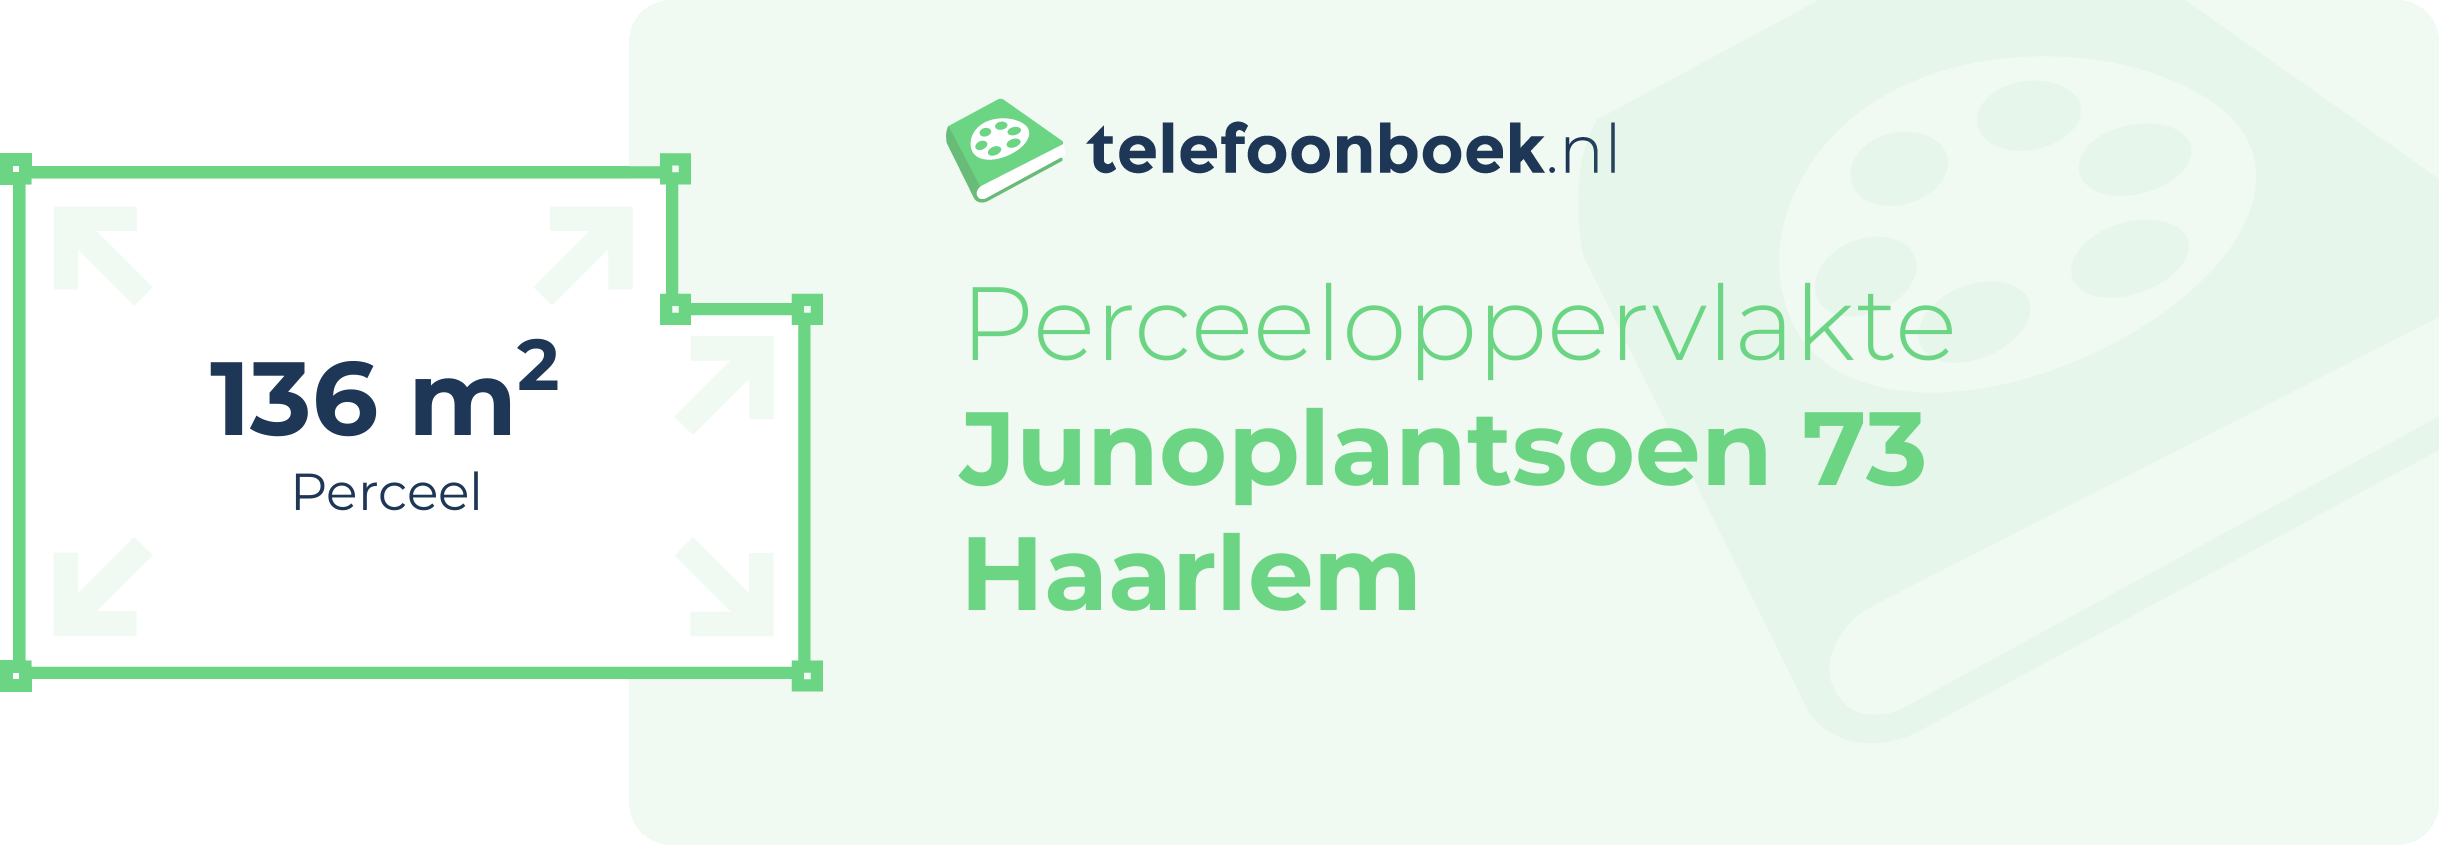 Perceeloppervlakte Junoplantsoen 73 Haarlem